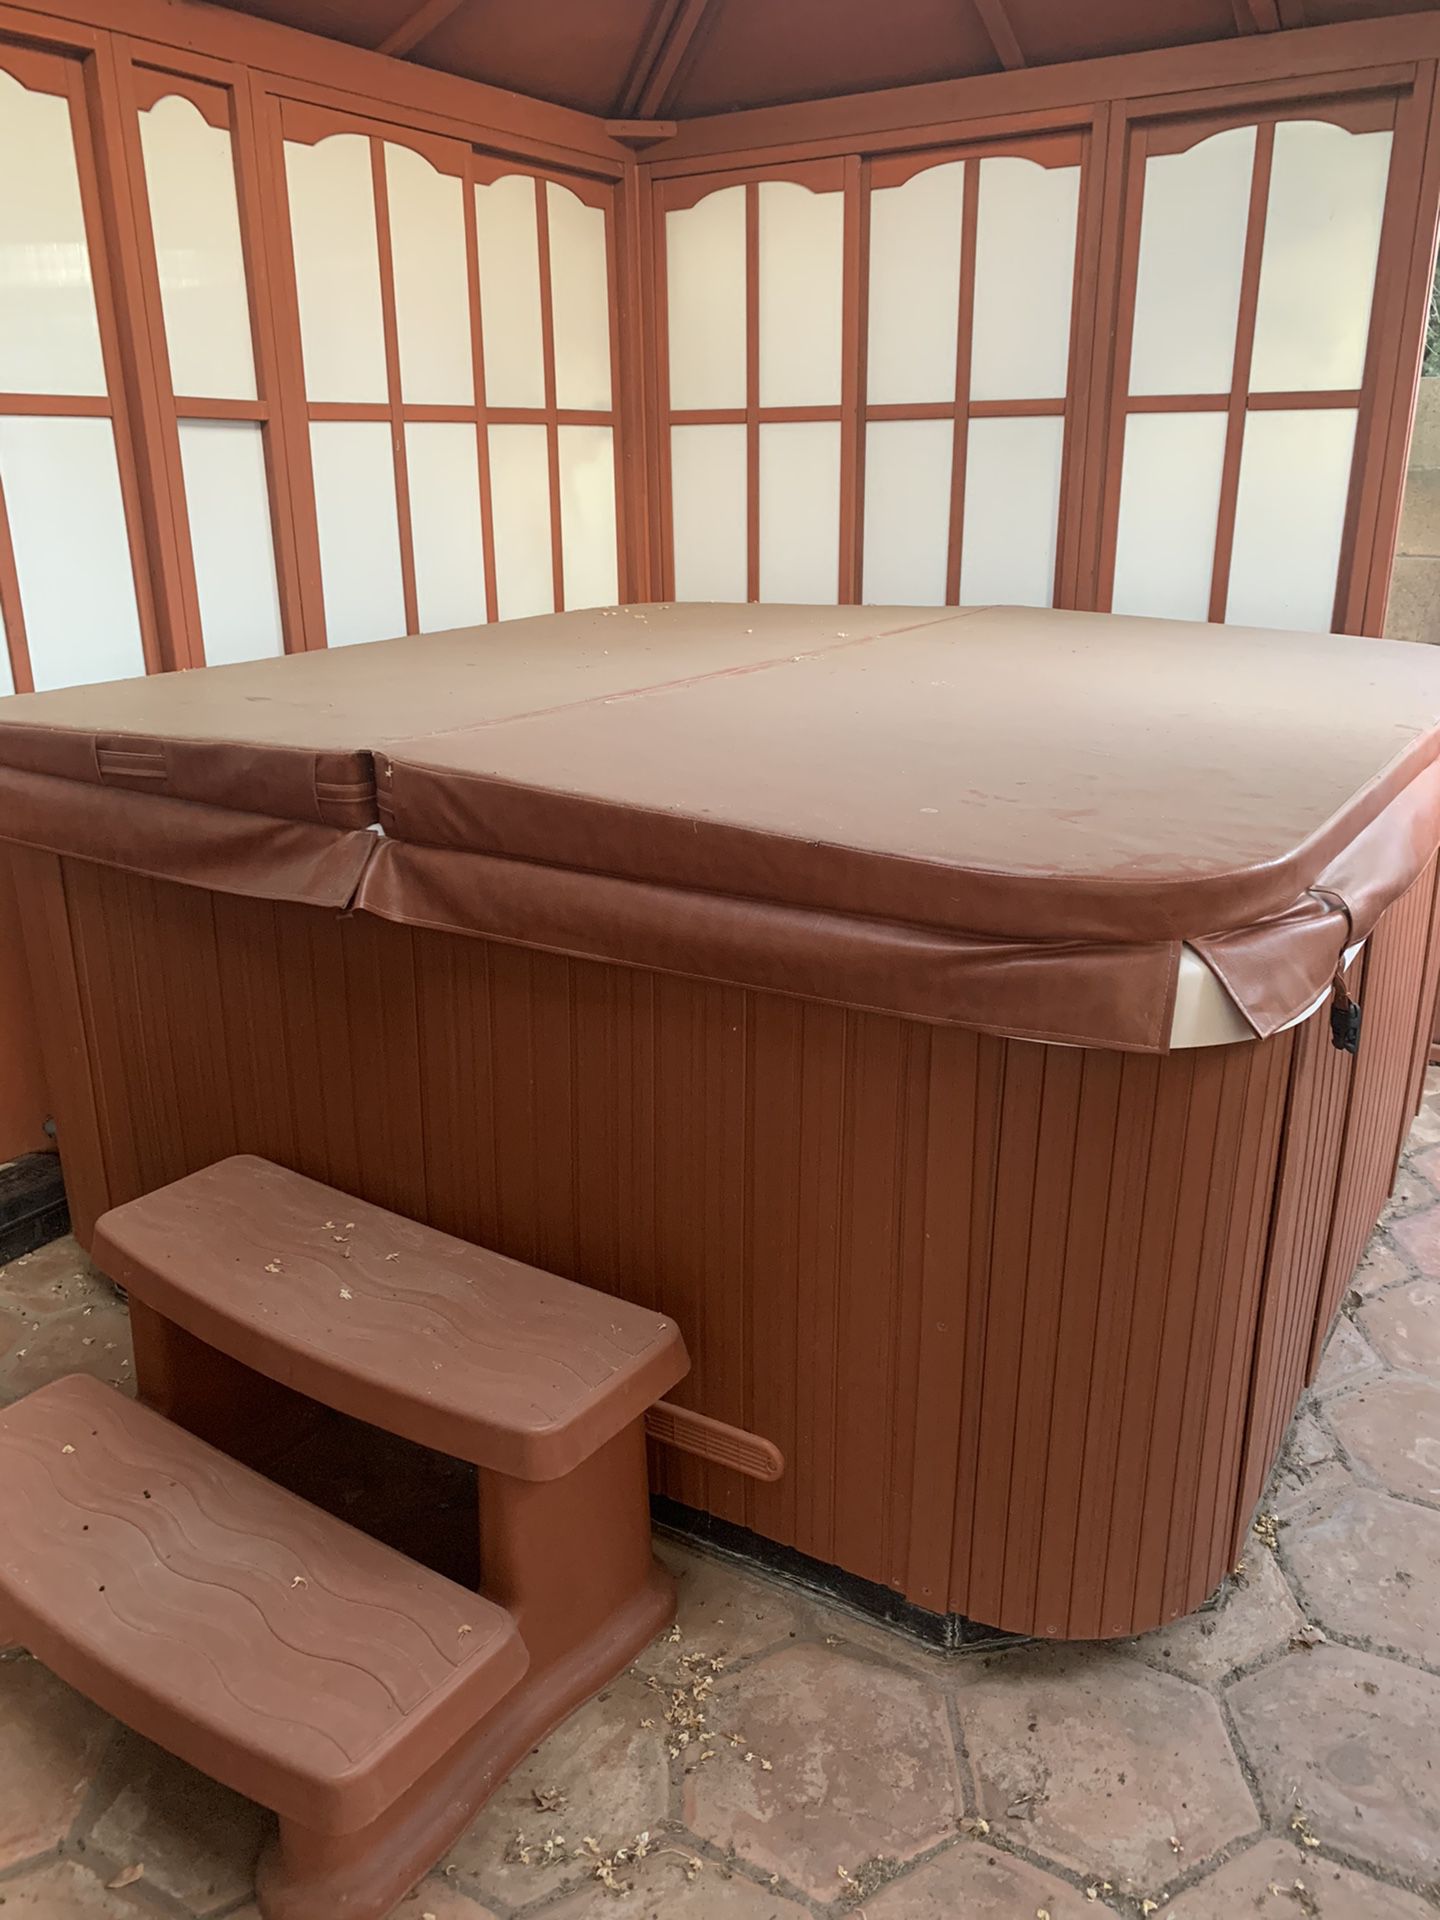 Life Spa Hot Tub